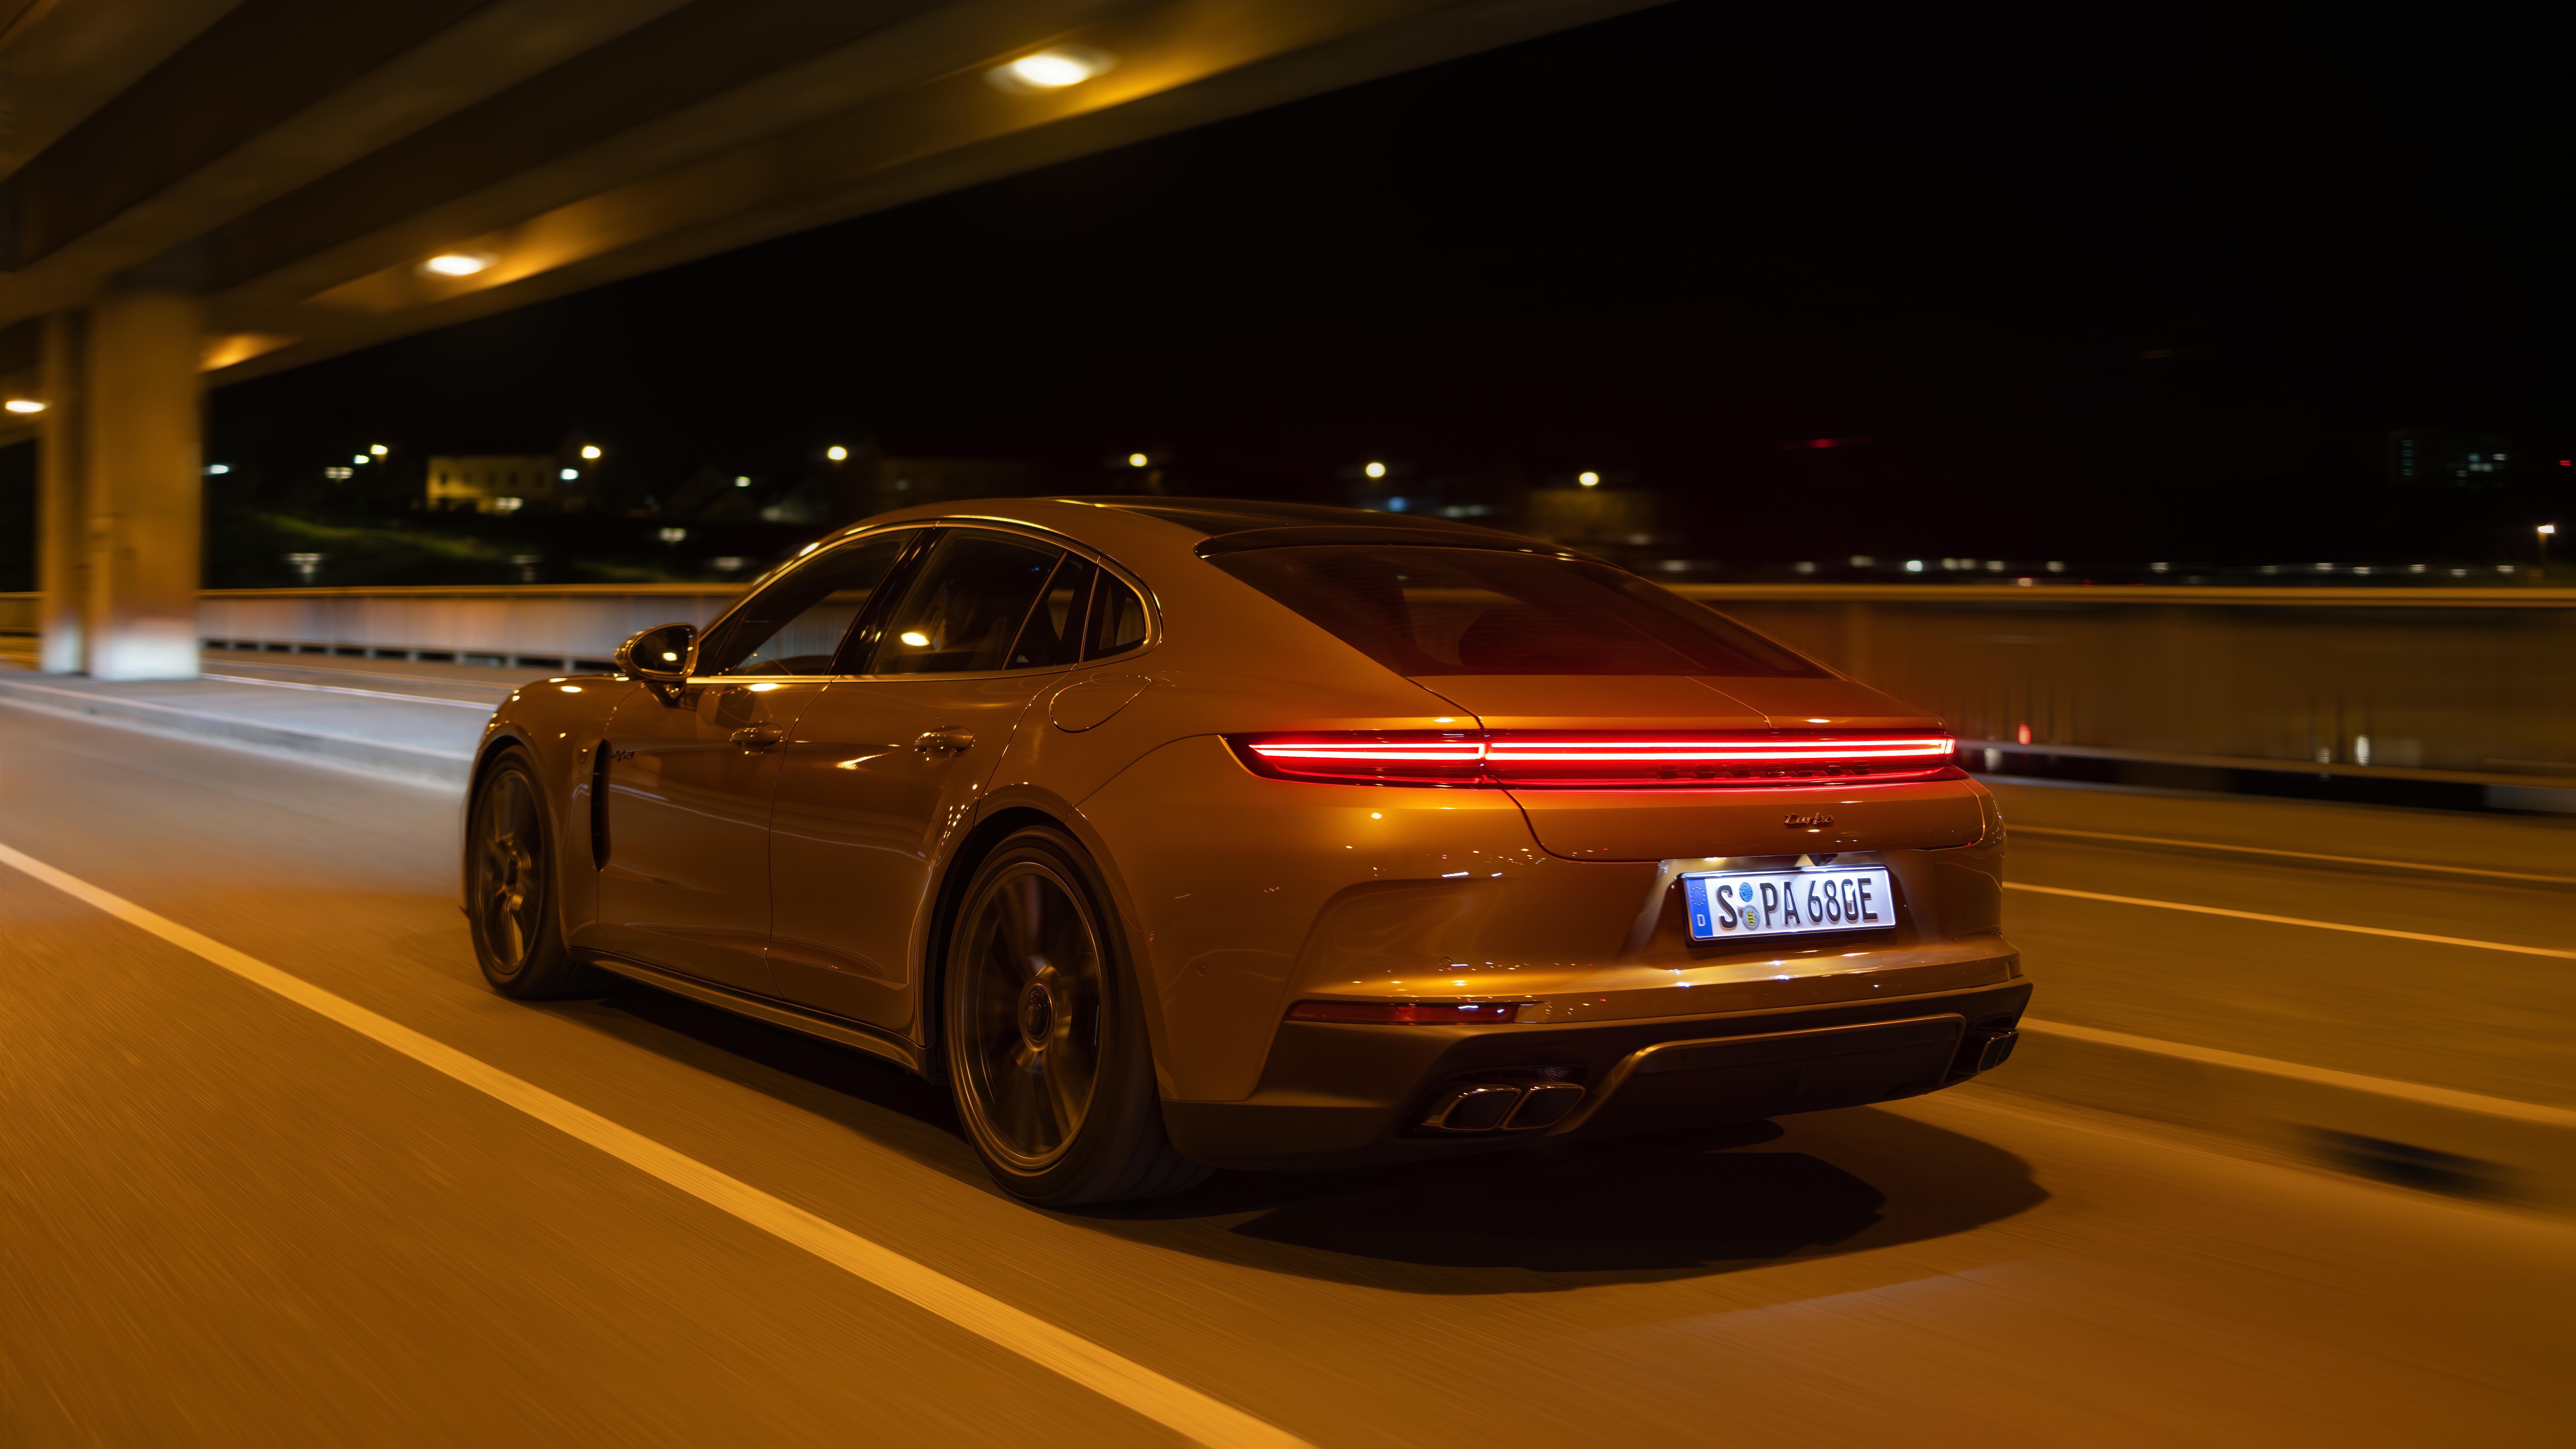 Porsche Panamera Turbo E-Hybrid at night, showing rear lighting